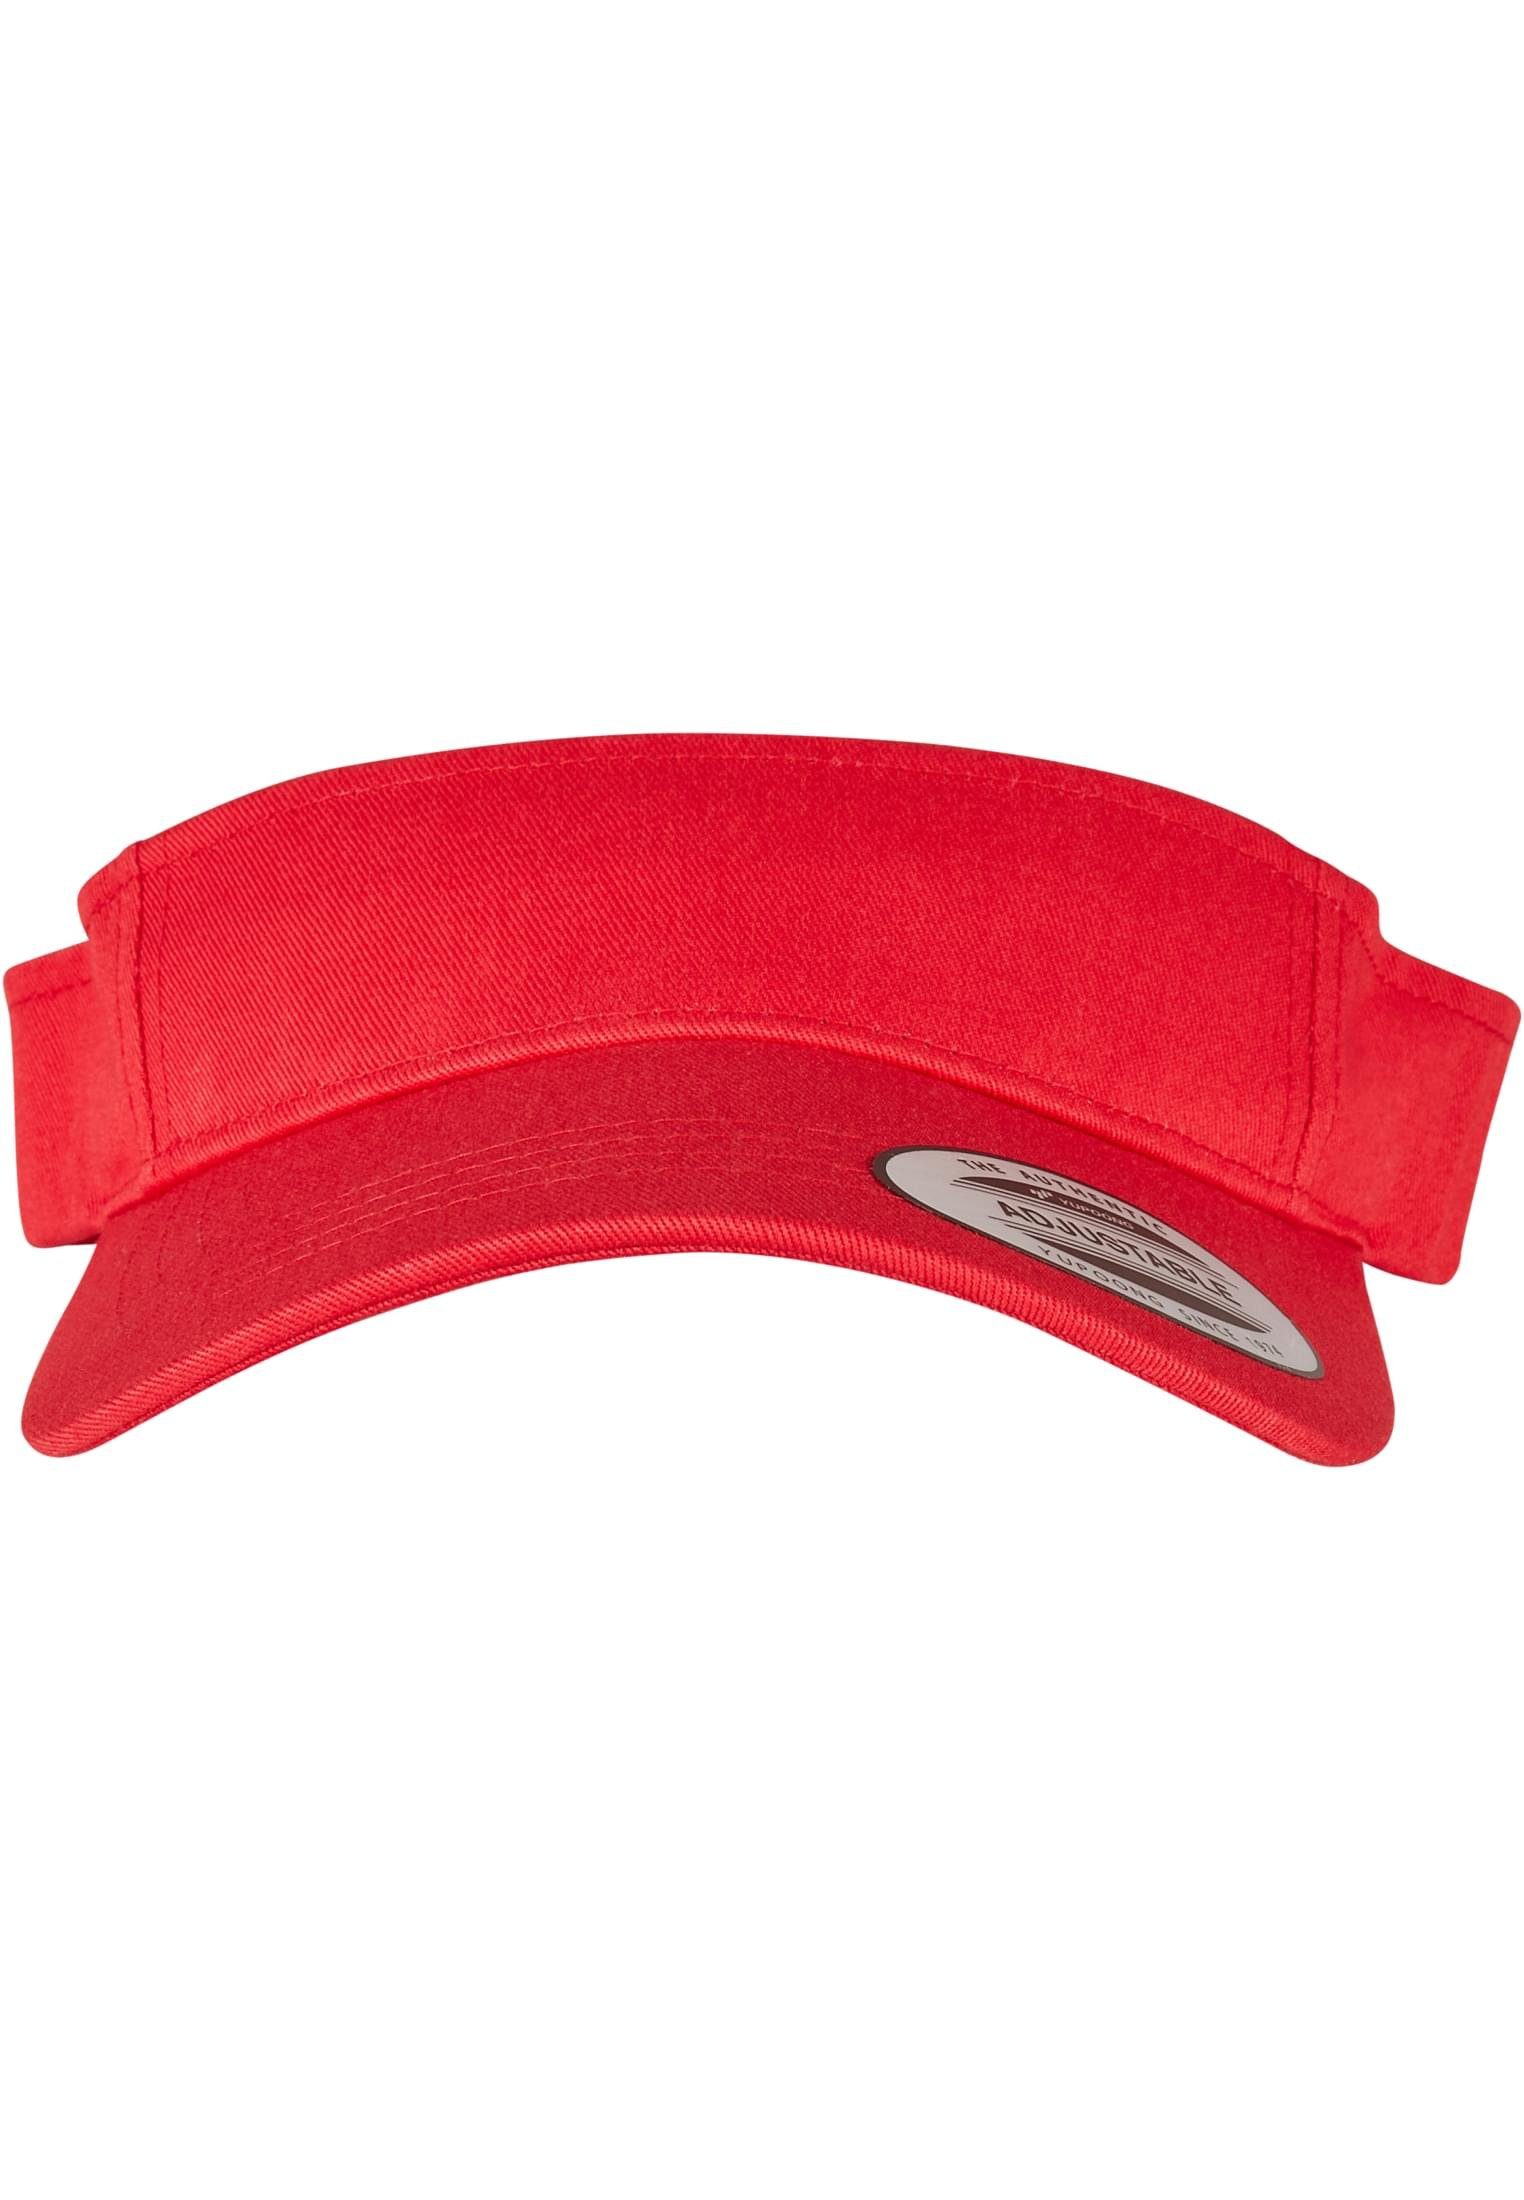 Cap red Accessoires Flex Visor Curved Flexfit Cap